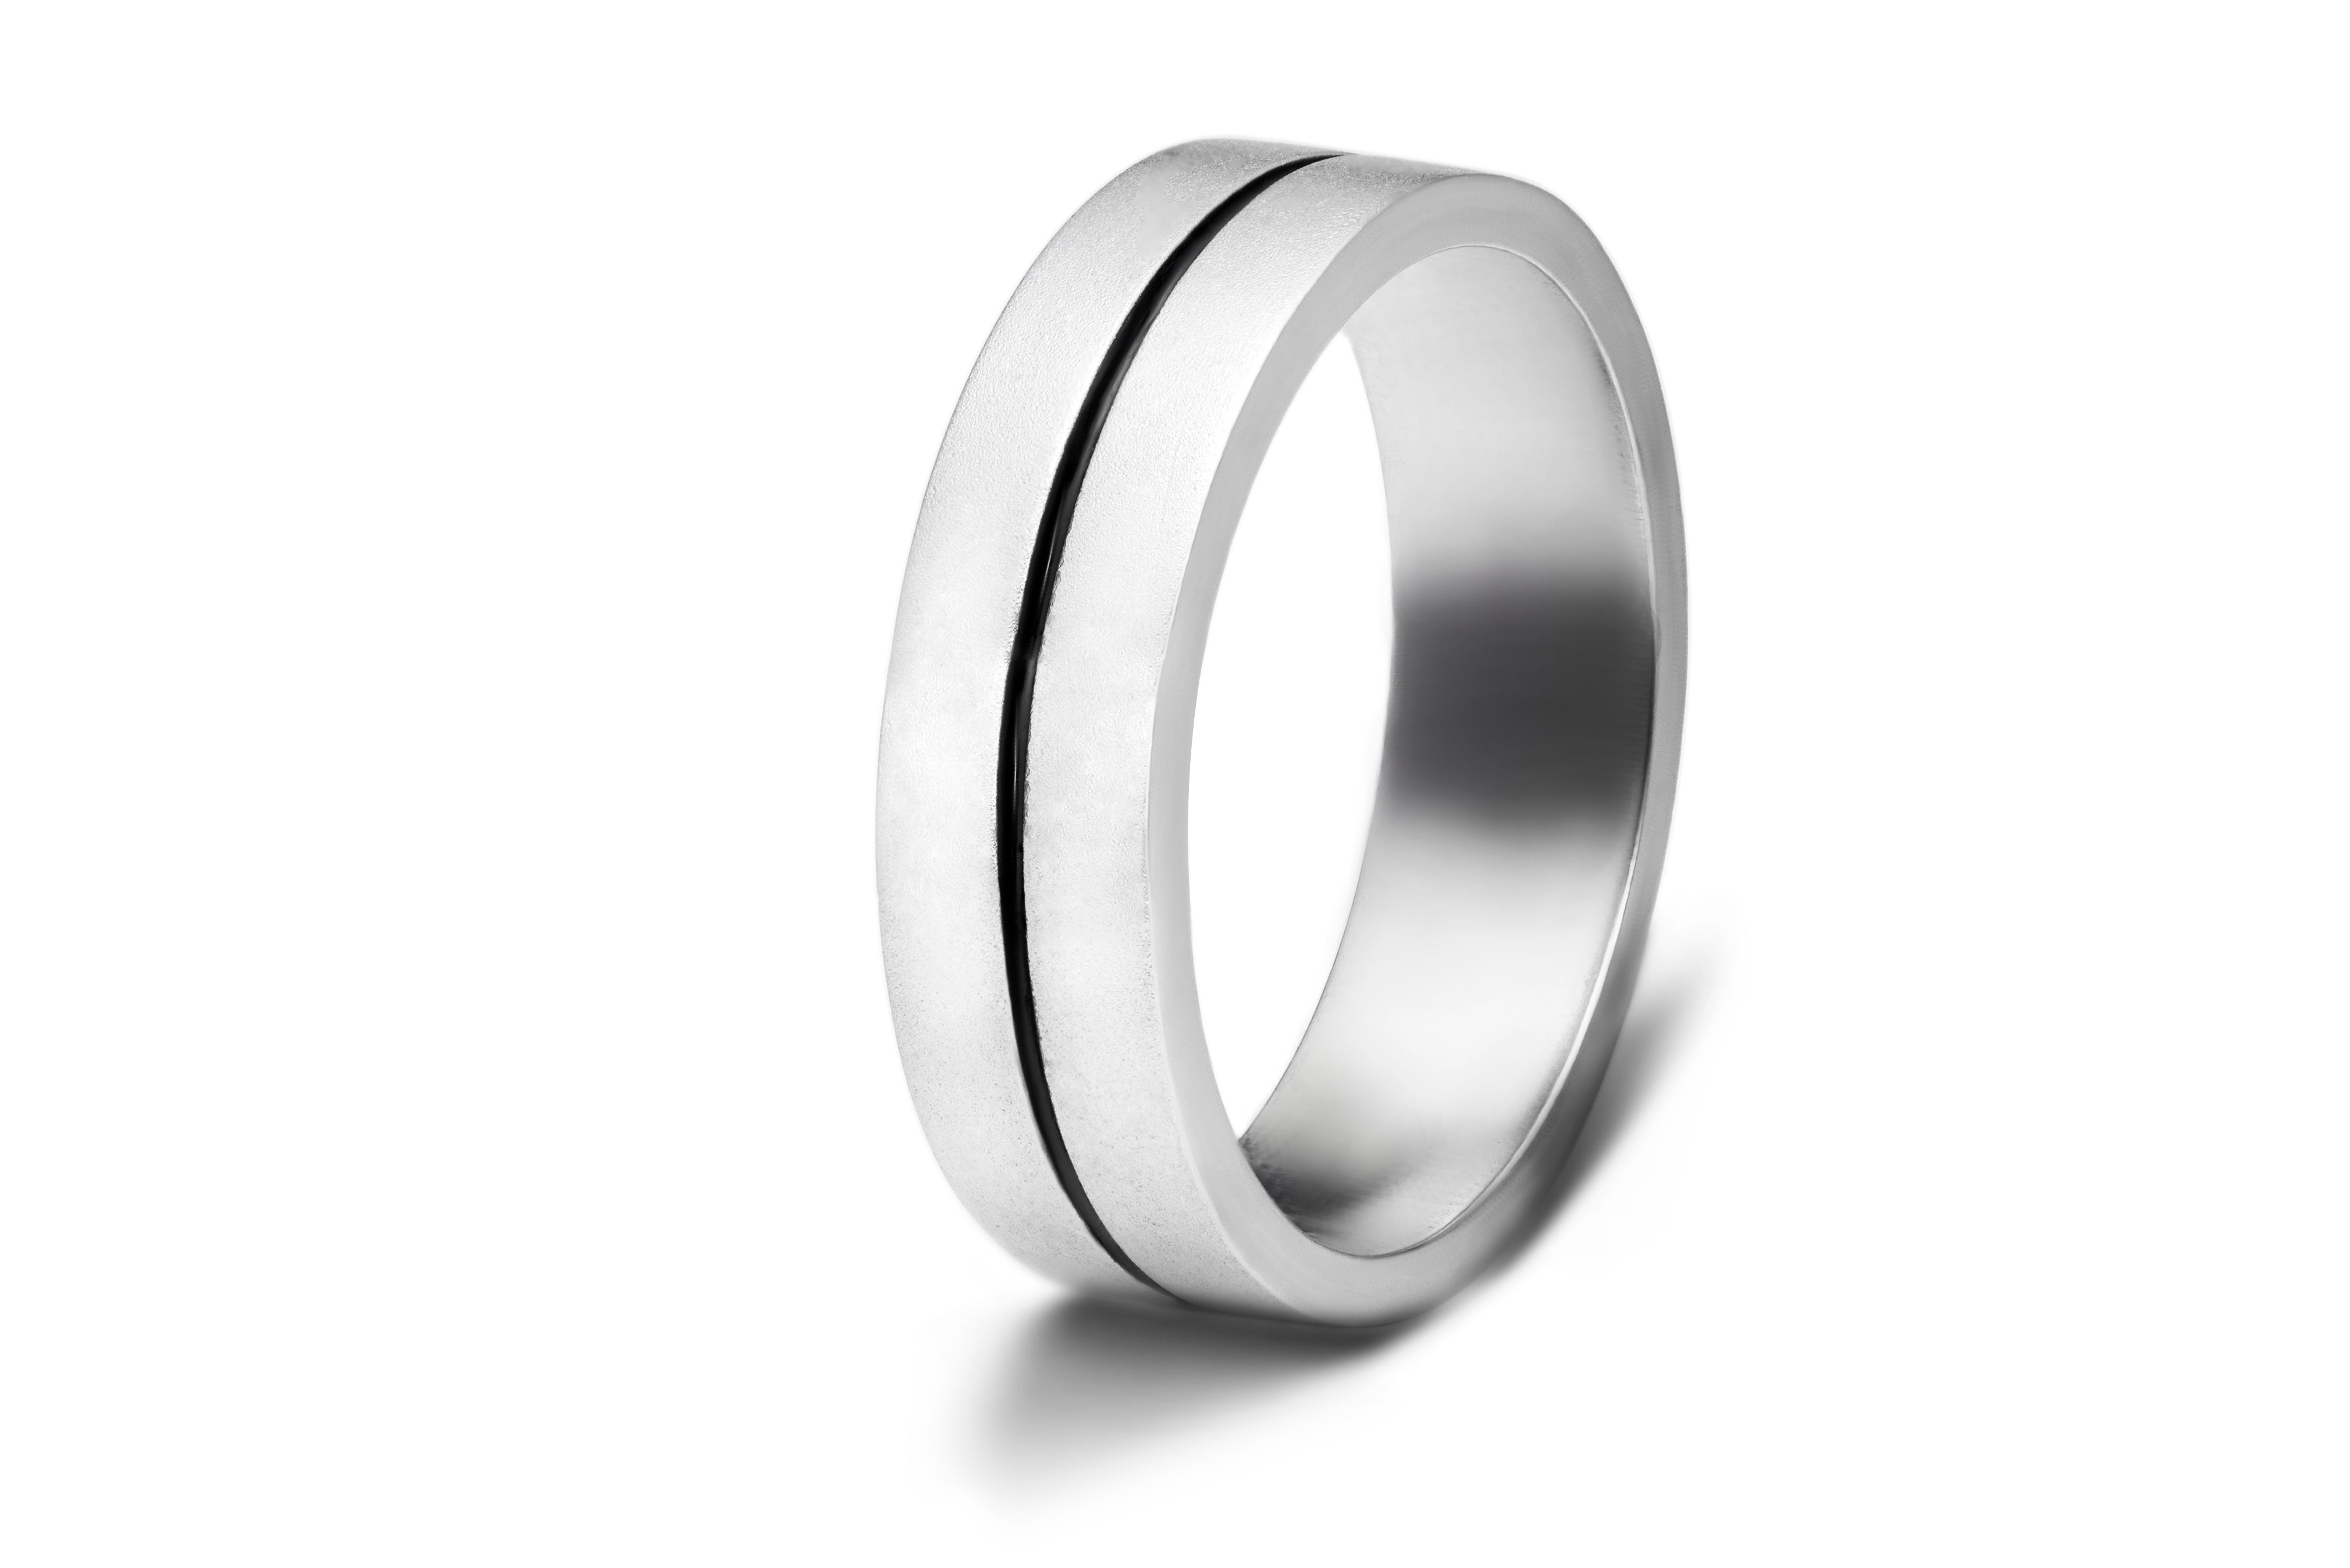 Silver Ring Price in Pakistan | Chandi Ring Design for Men ®️